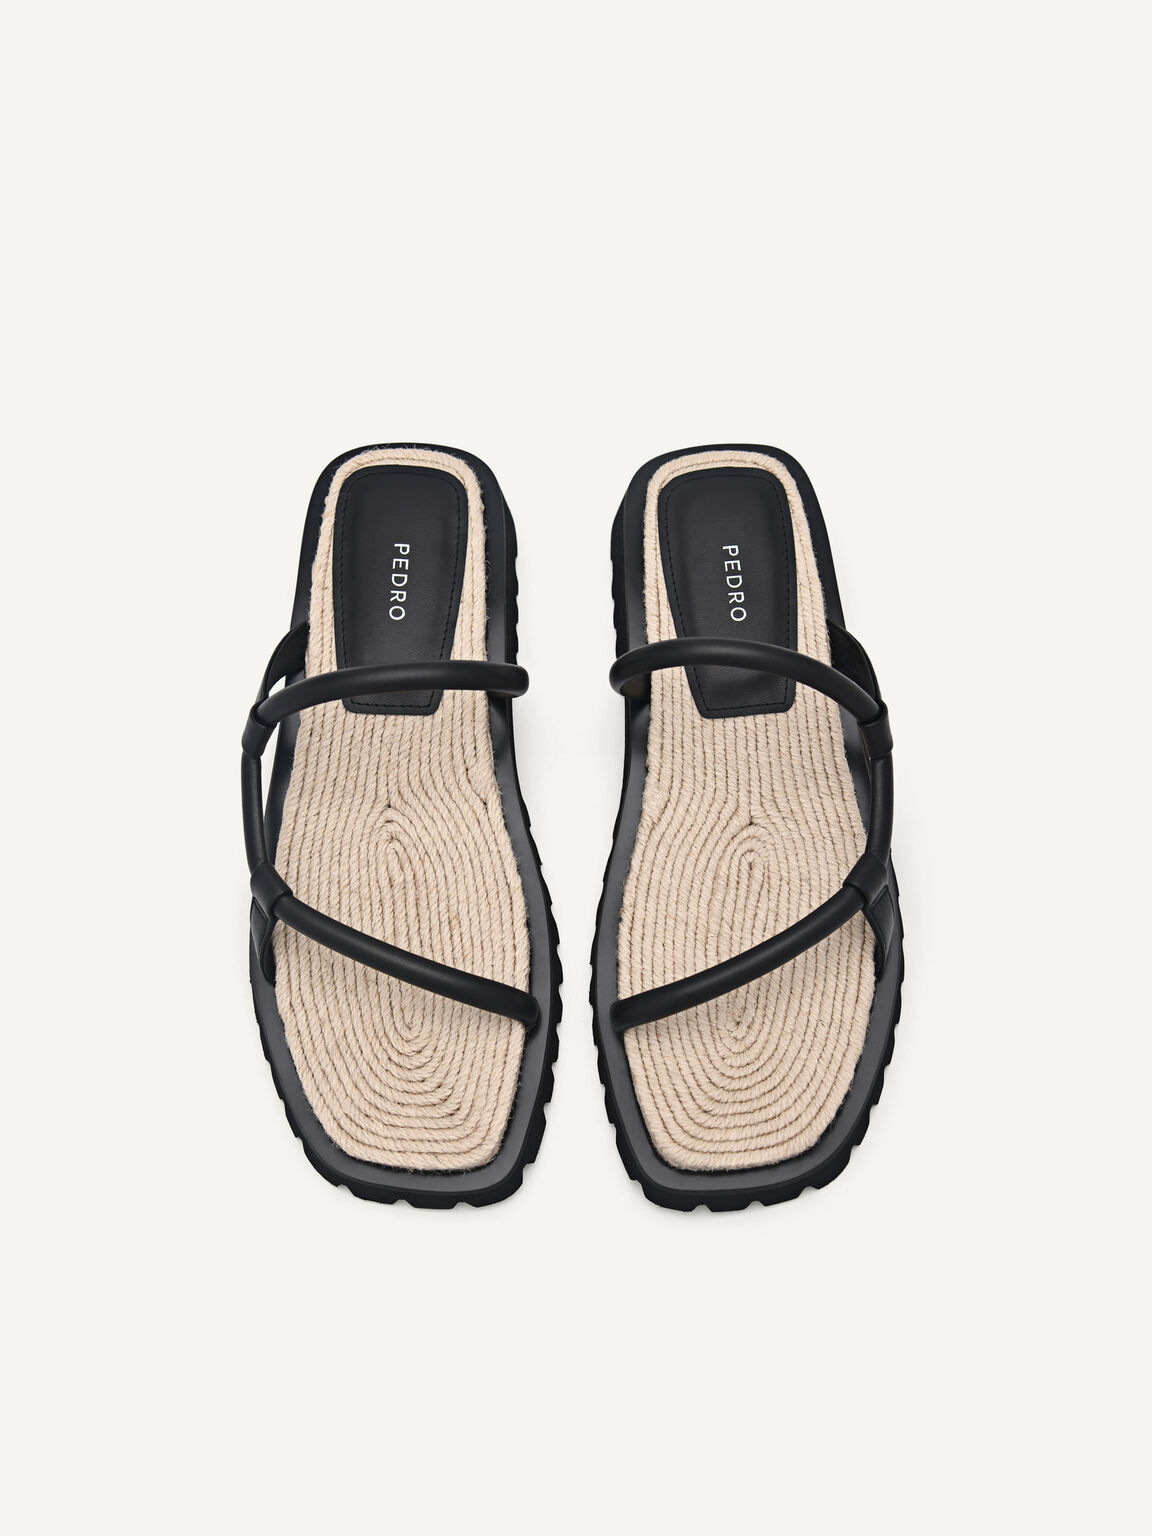 Black Woven Sandals - PEDRO SG